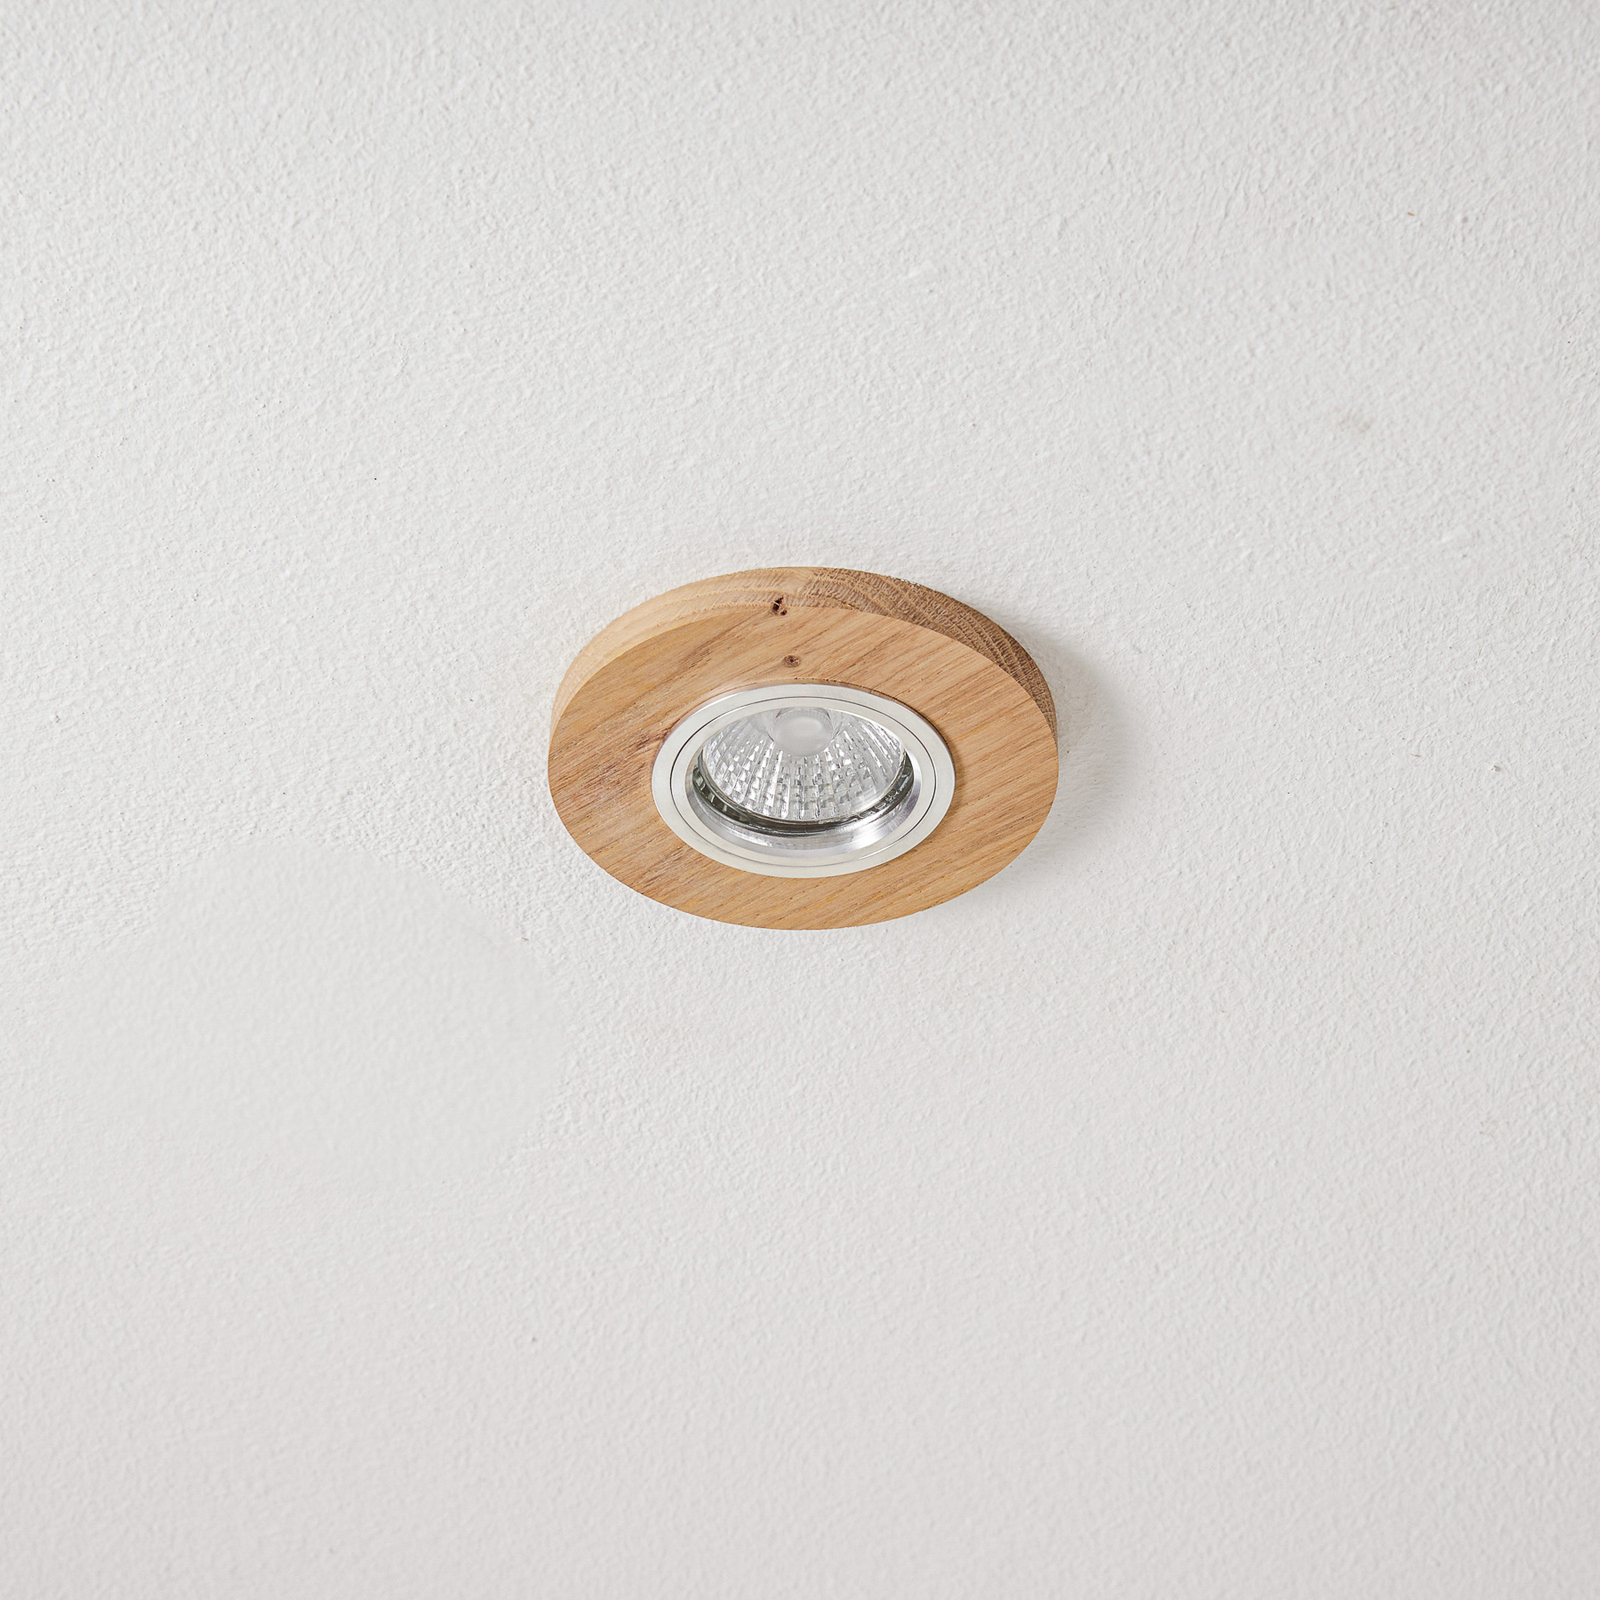 Sirion recessed spotlight, round, Ø 10 cm, oak wood, GU10